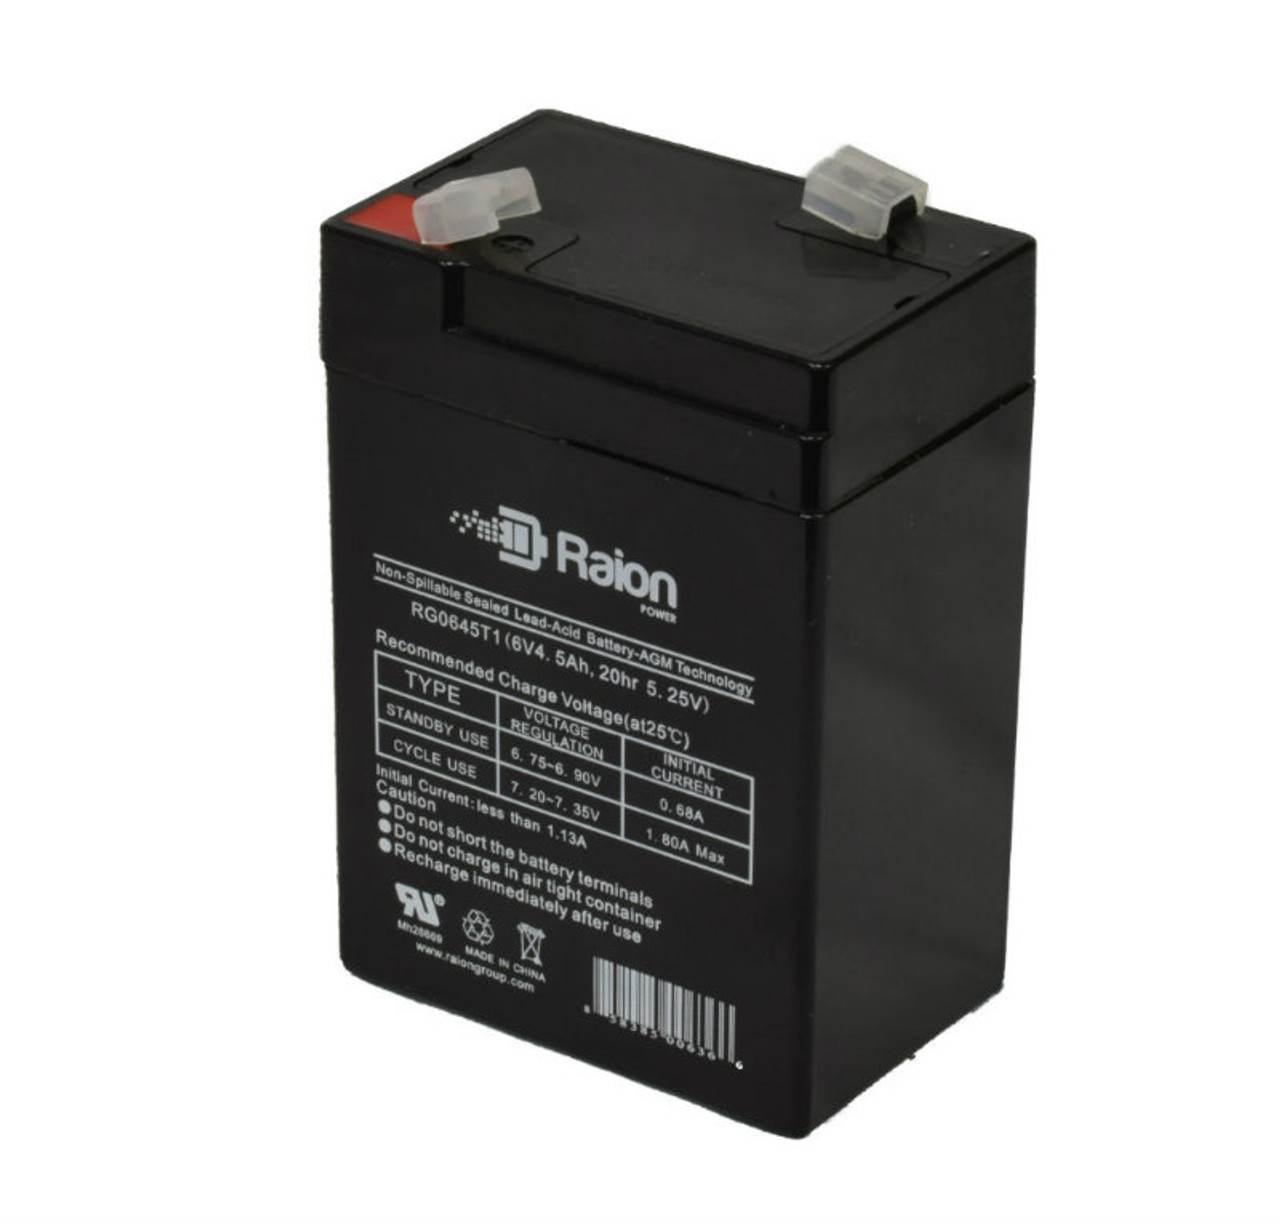 Raion Power RG0645T1 6V 4.5Ah Replacement Battery Cartridge for Sonnenschein 7895391